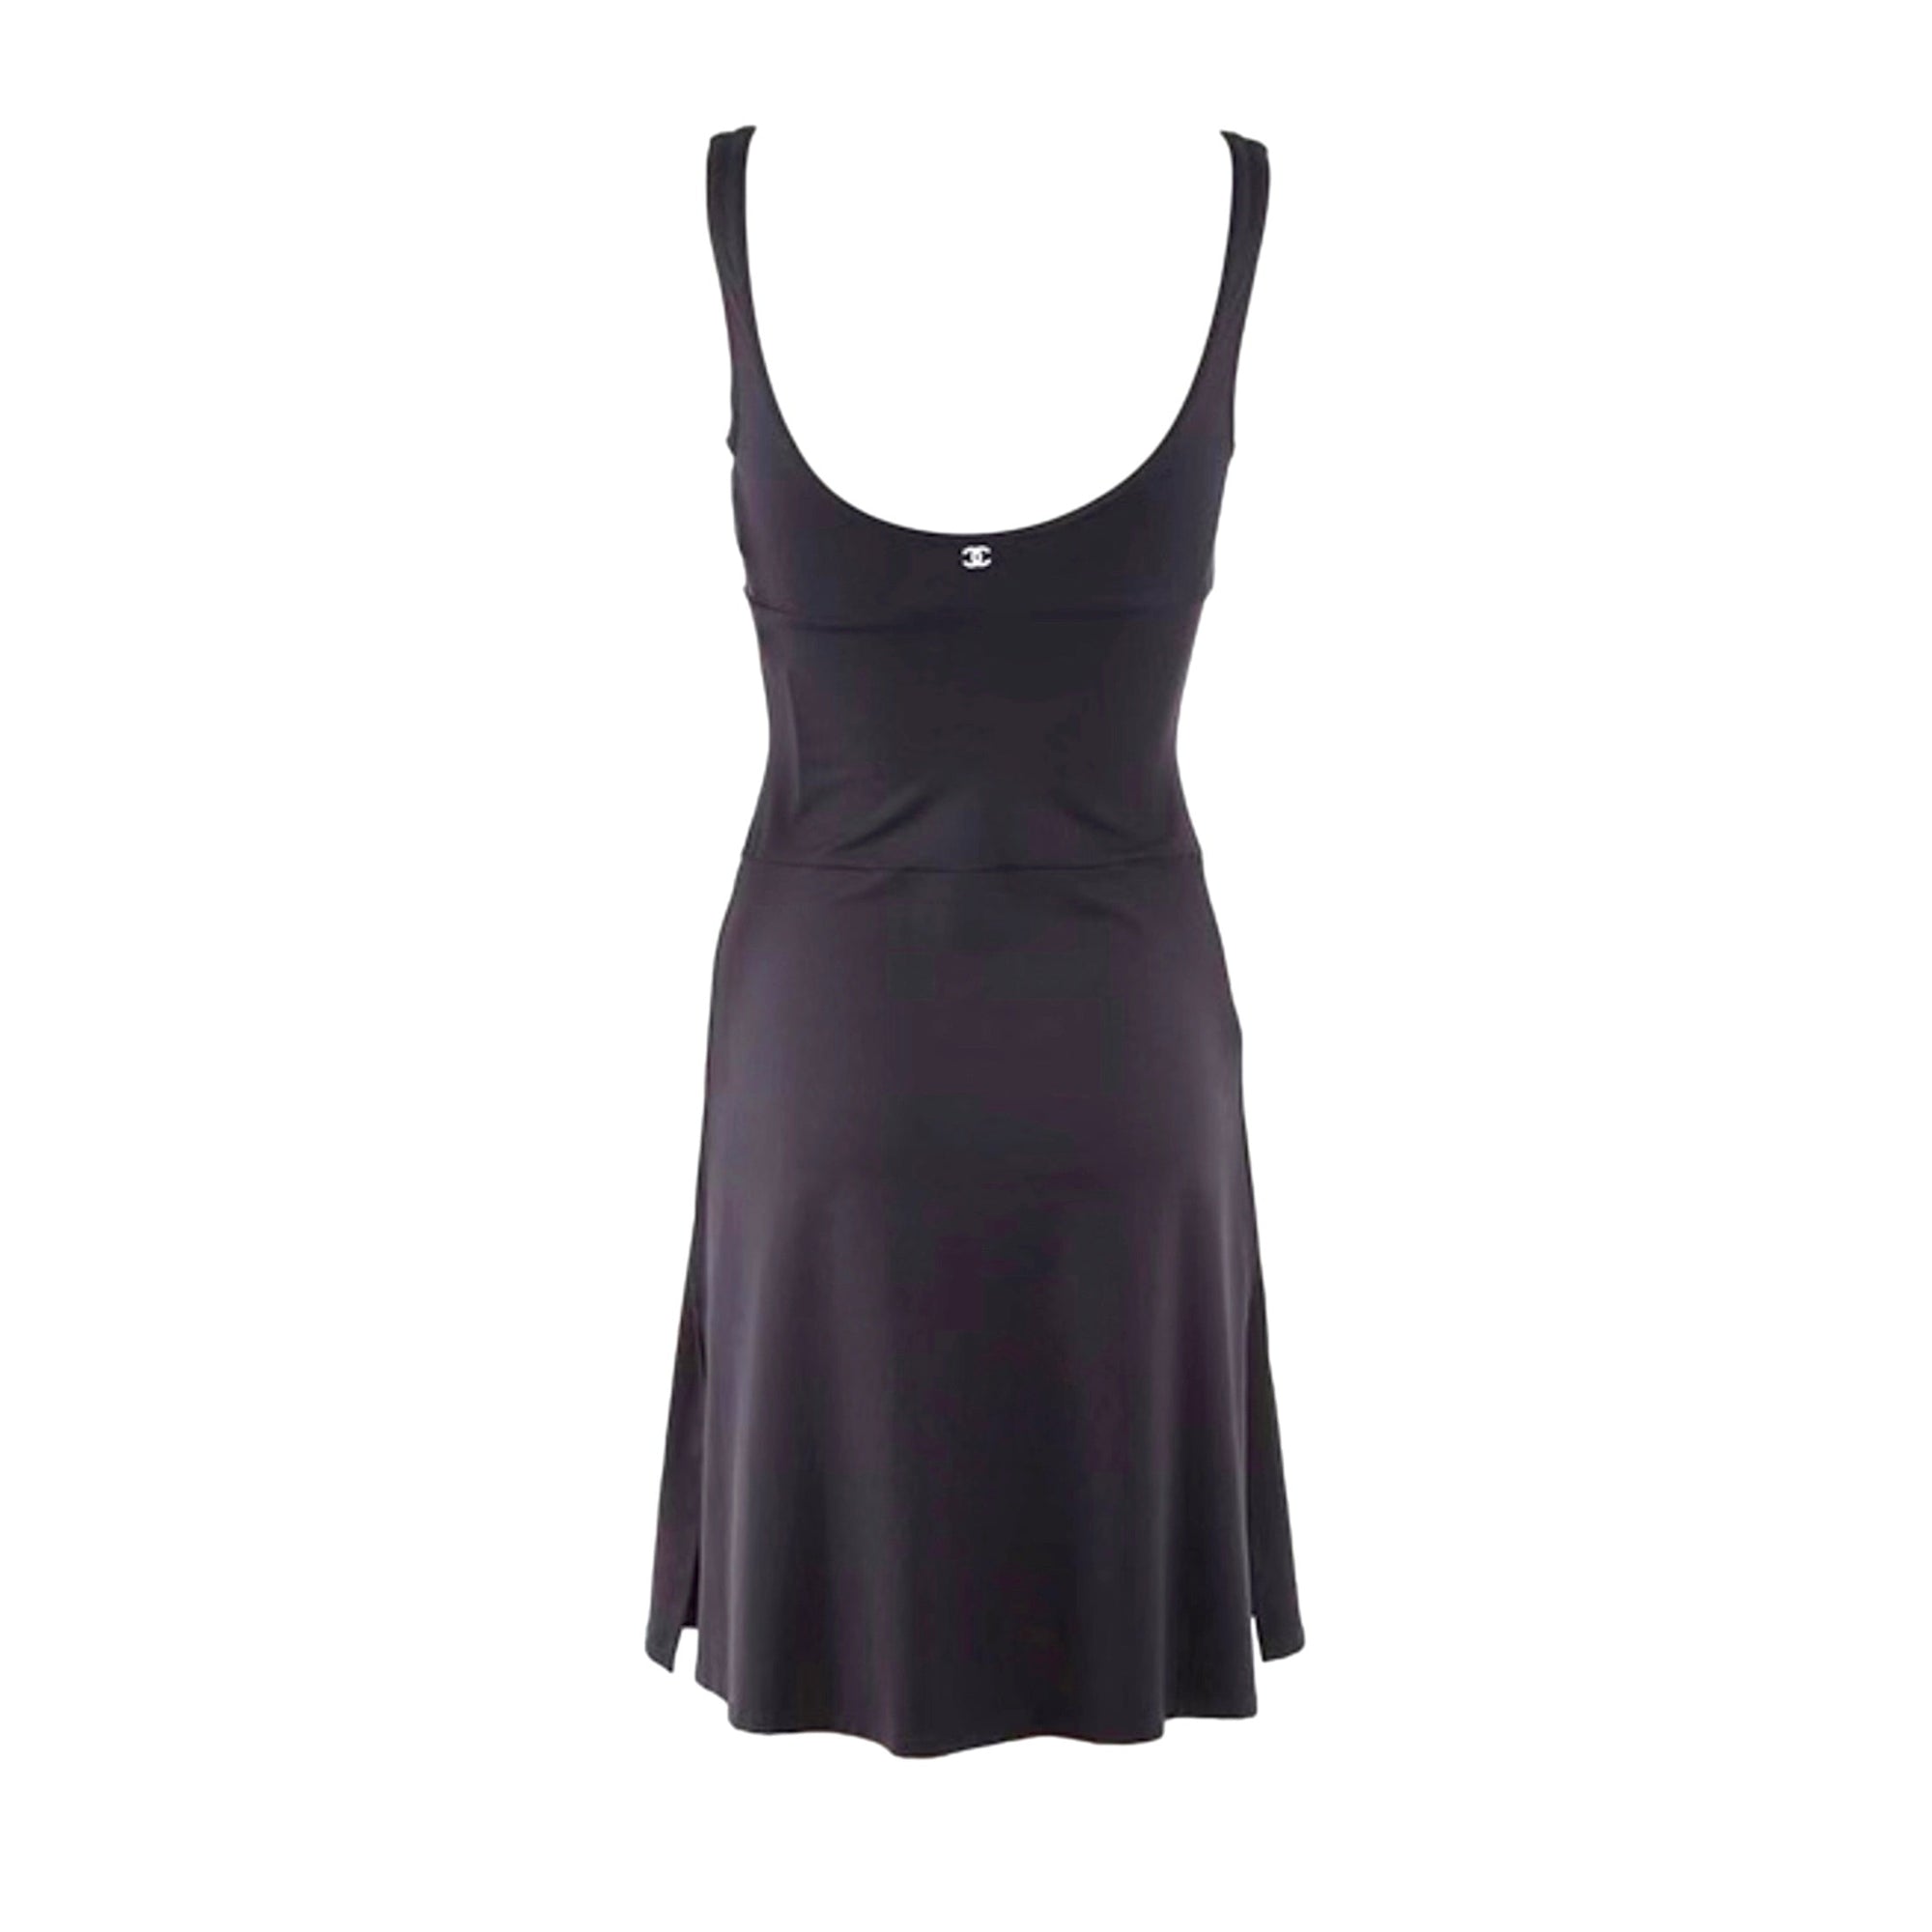 Chanel Black Stretch Tank Dress - Apparel